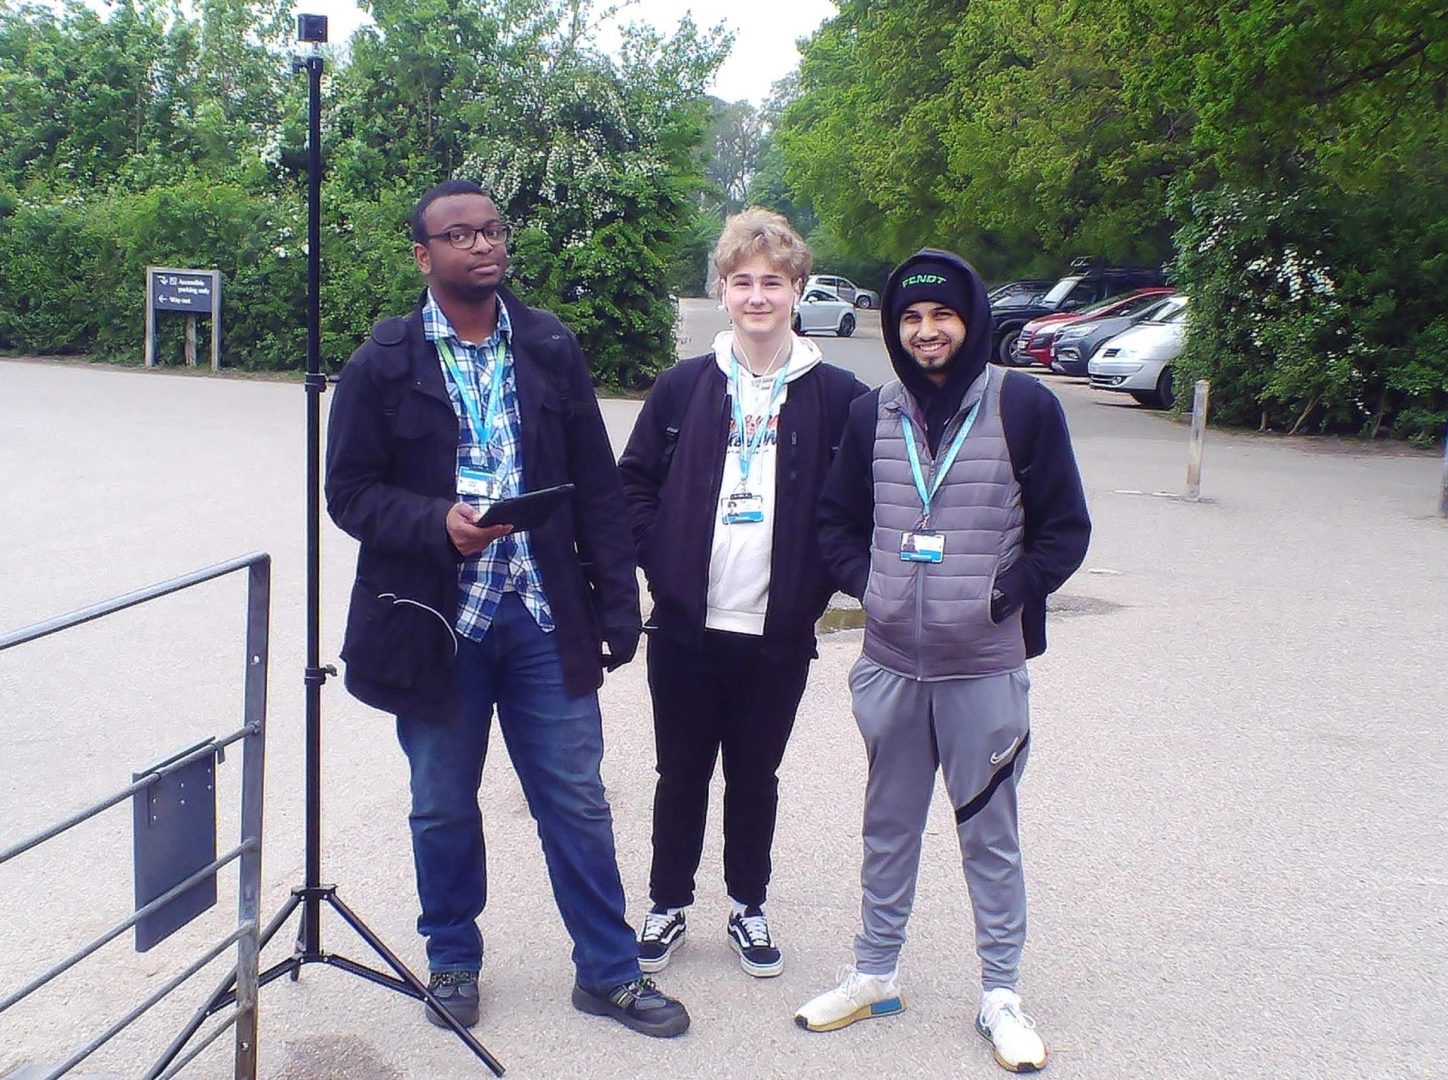 Computing students on location at Attingham Park